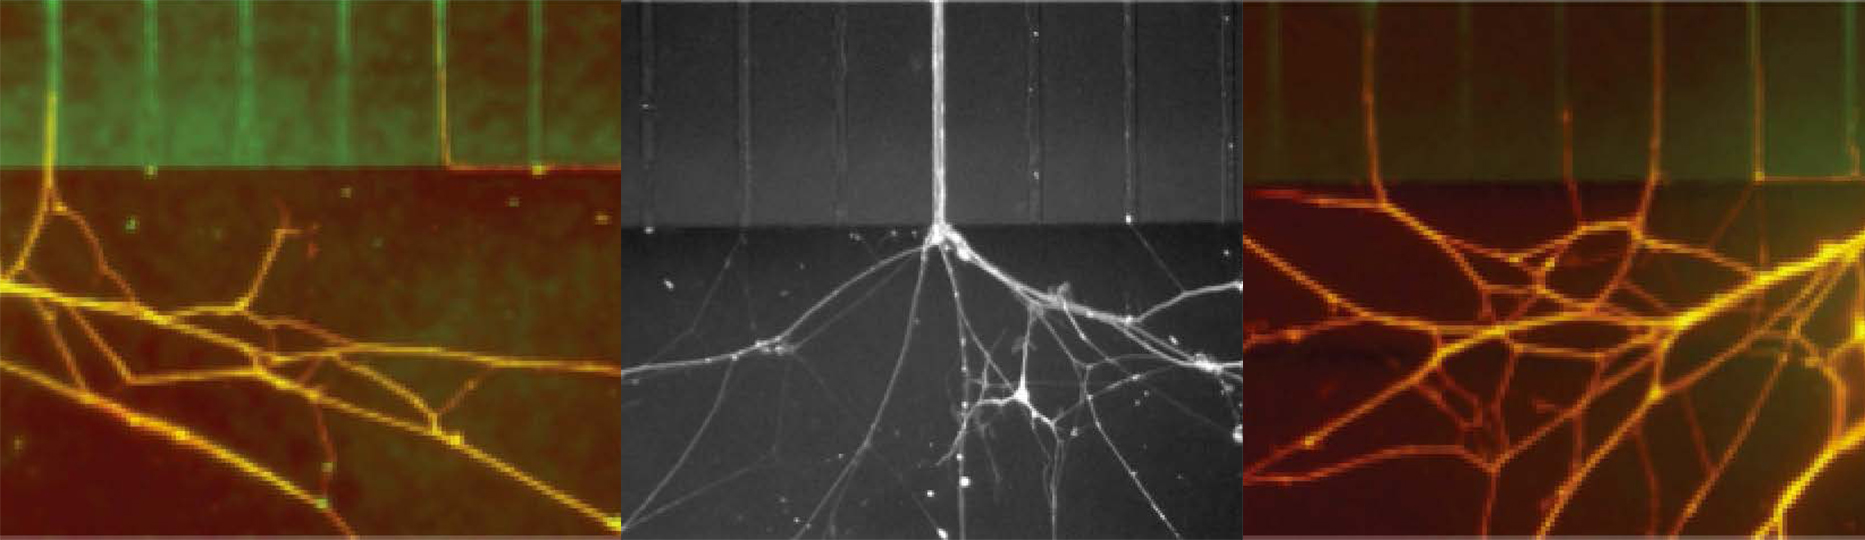 isolate axonal tracks in neuronal microfluidic platforms